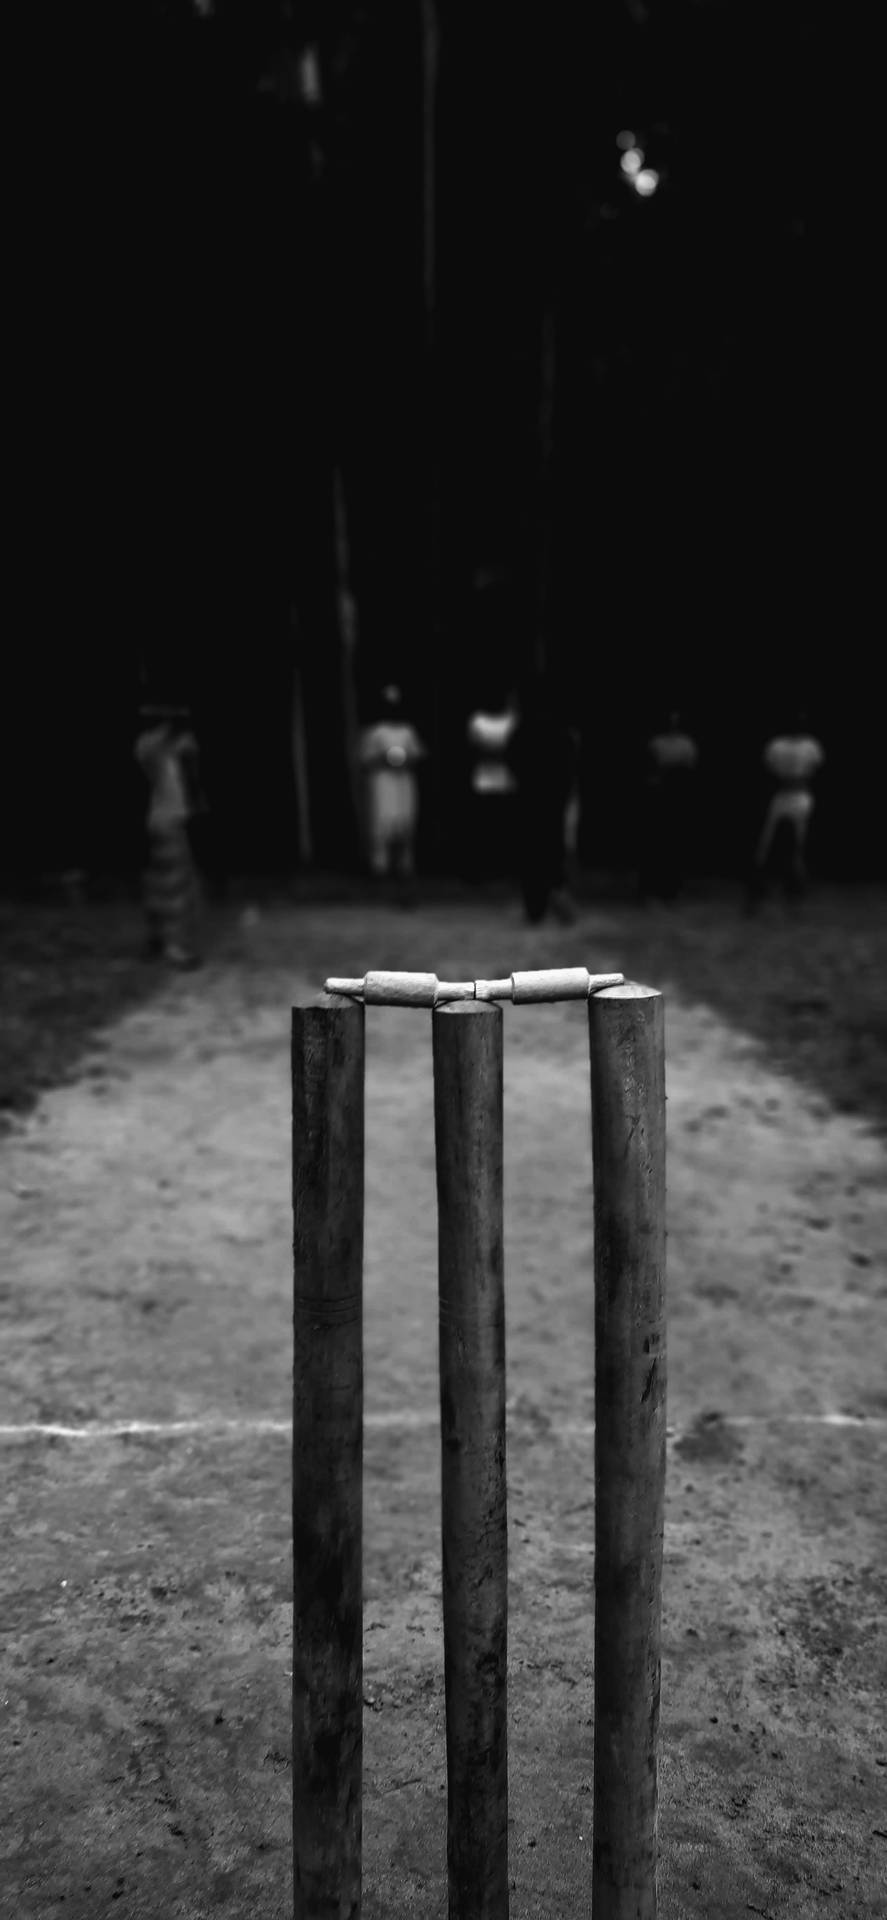 Cricket Wooden Stump In Greyscale Wallpaper